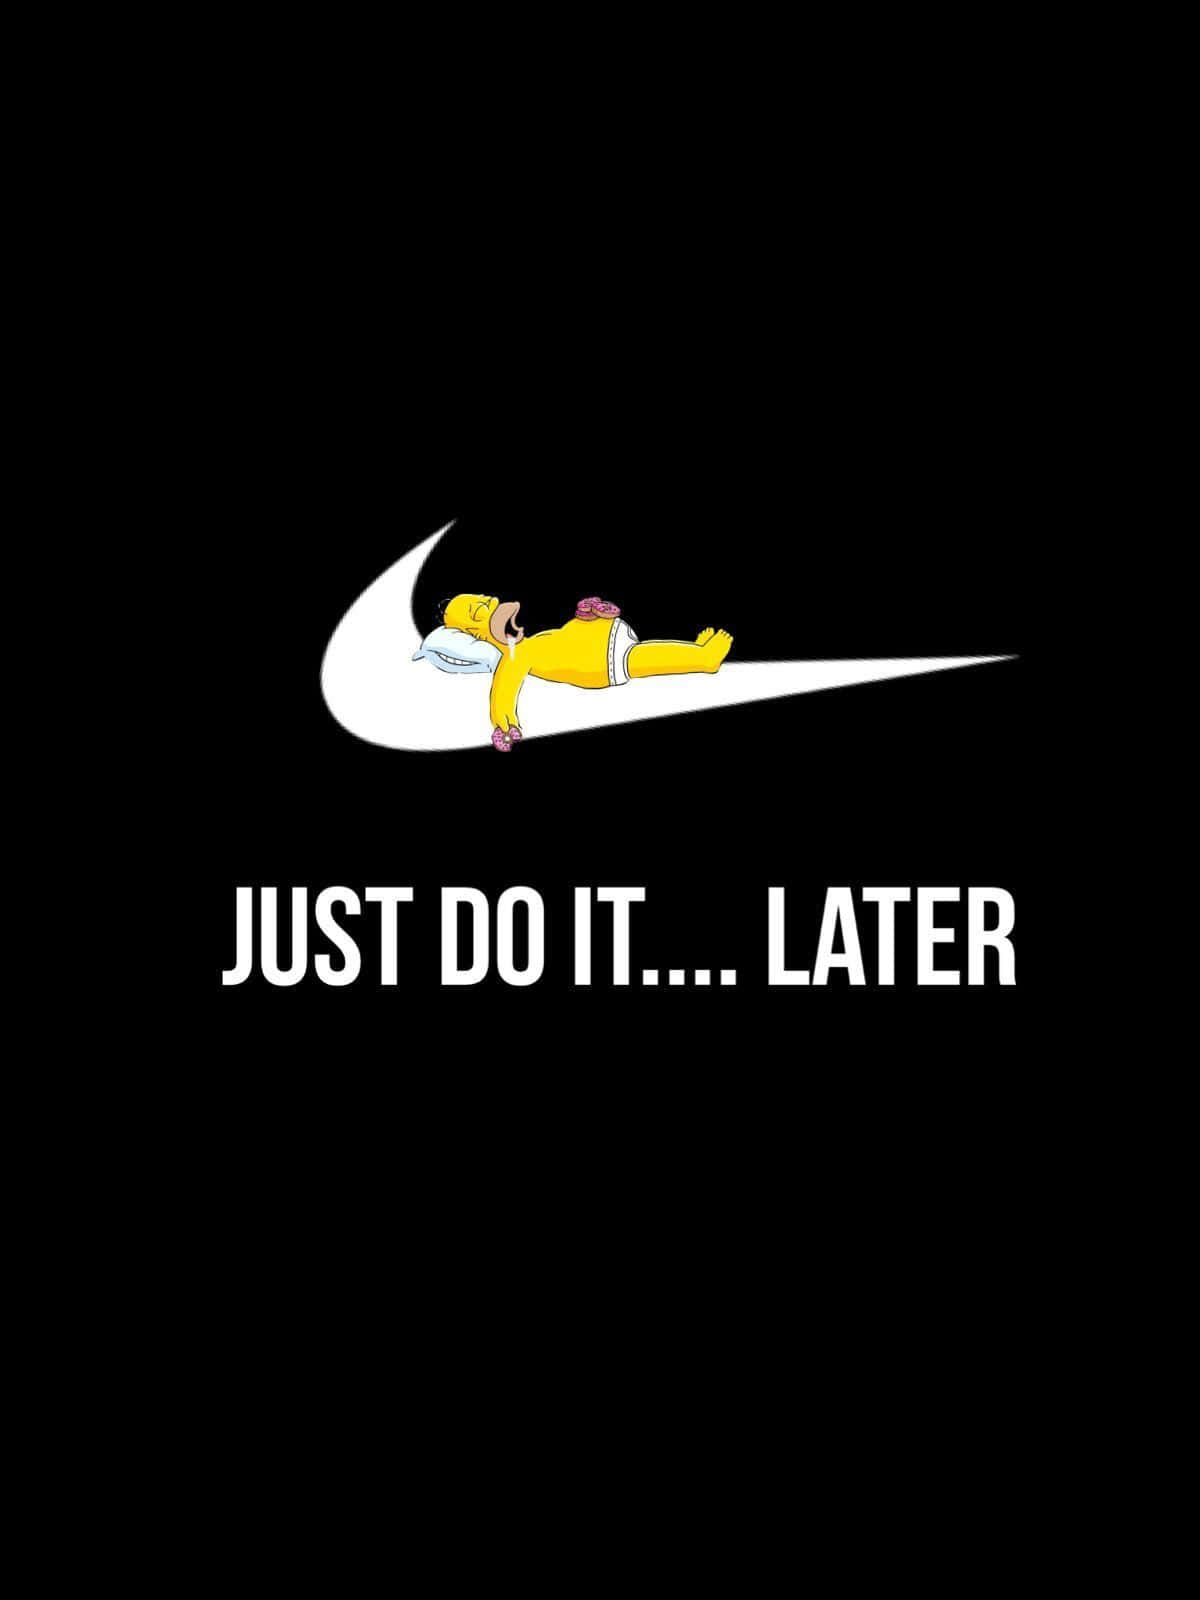 A Motivational Twist: "Just Do It Later" Wallpaper